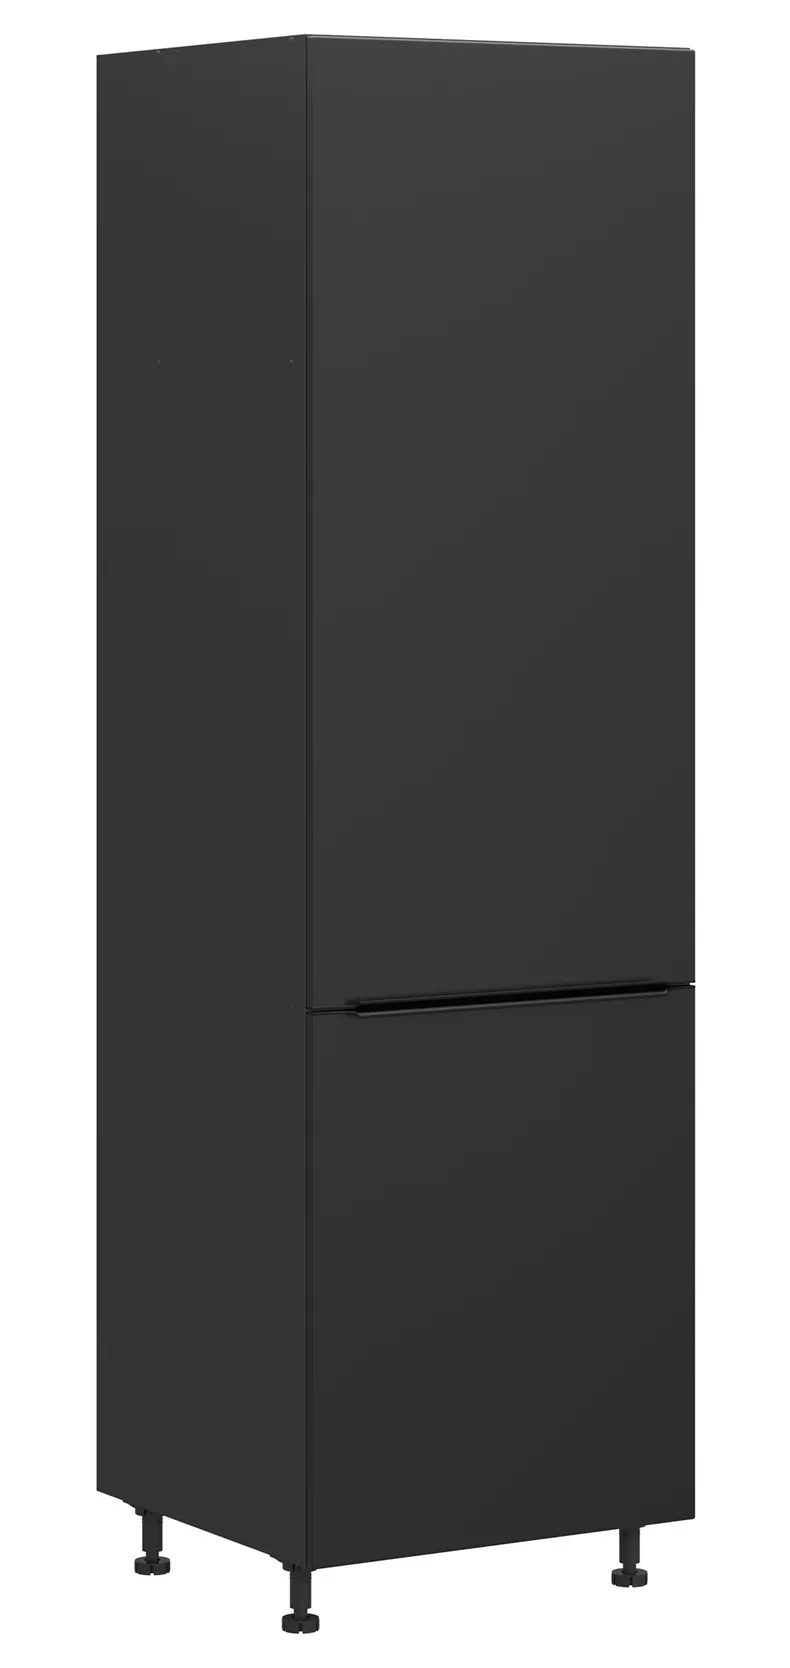 BRW Підошва L6 висотою 60 см ліва кухонна шафа чорна матова, чорний/чорний матовий FM_D_60/207_L/L-CA/CAM фото №2